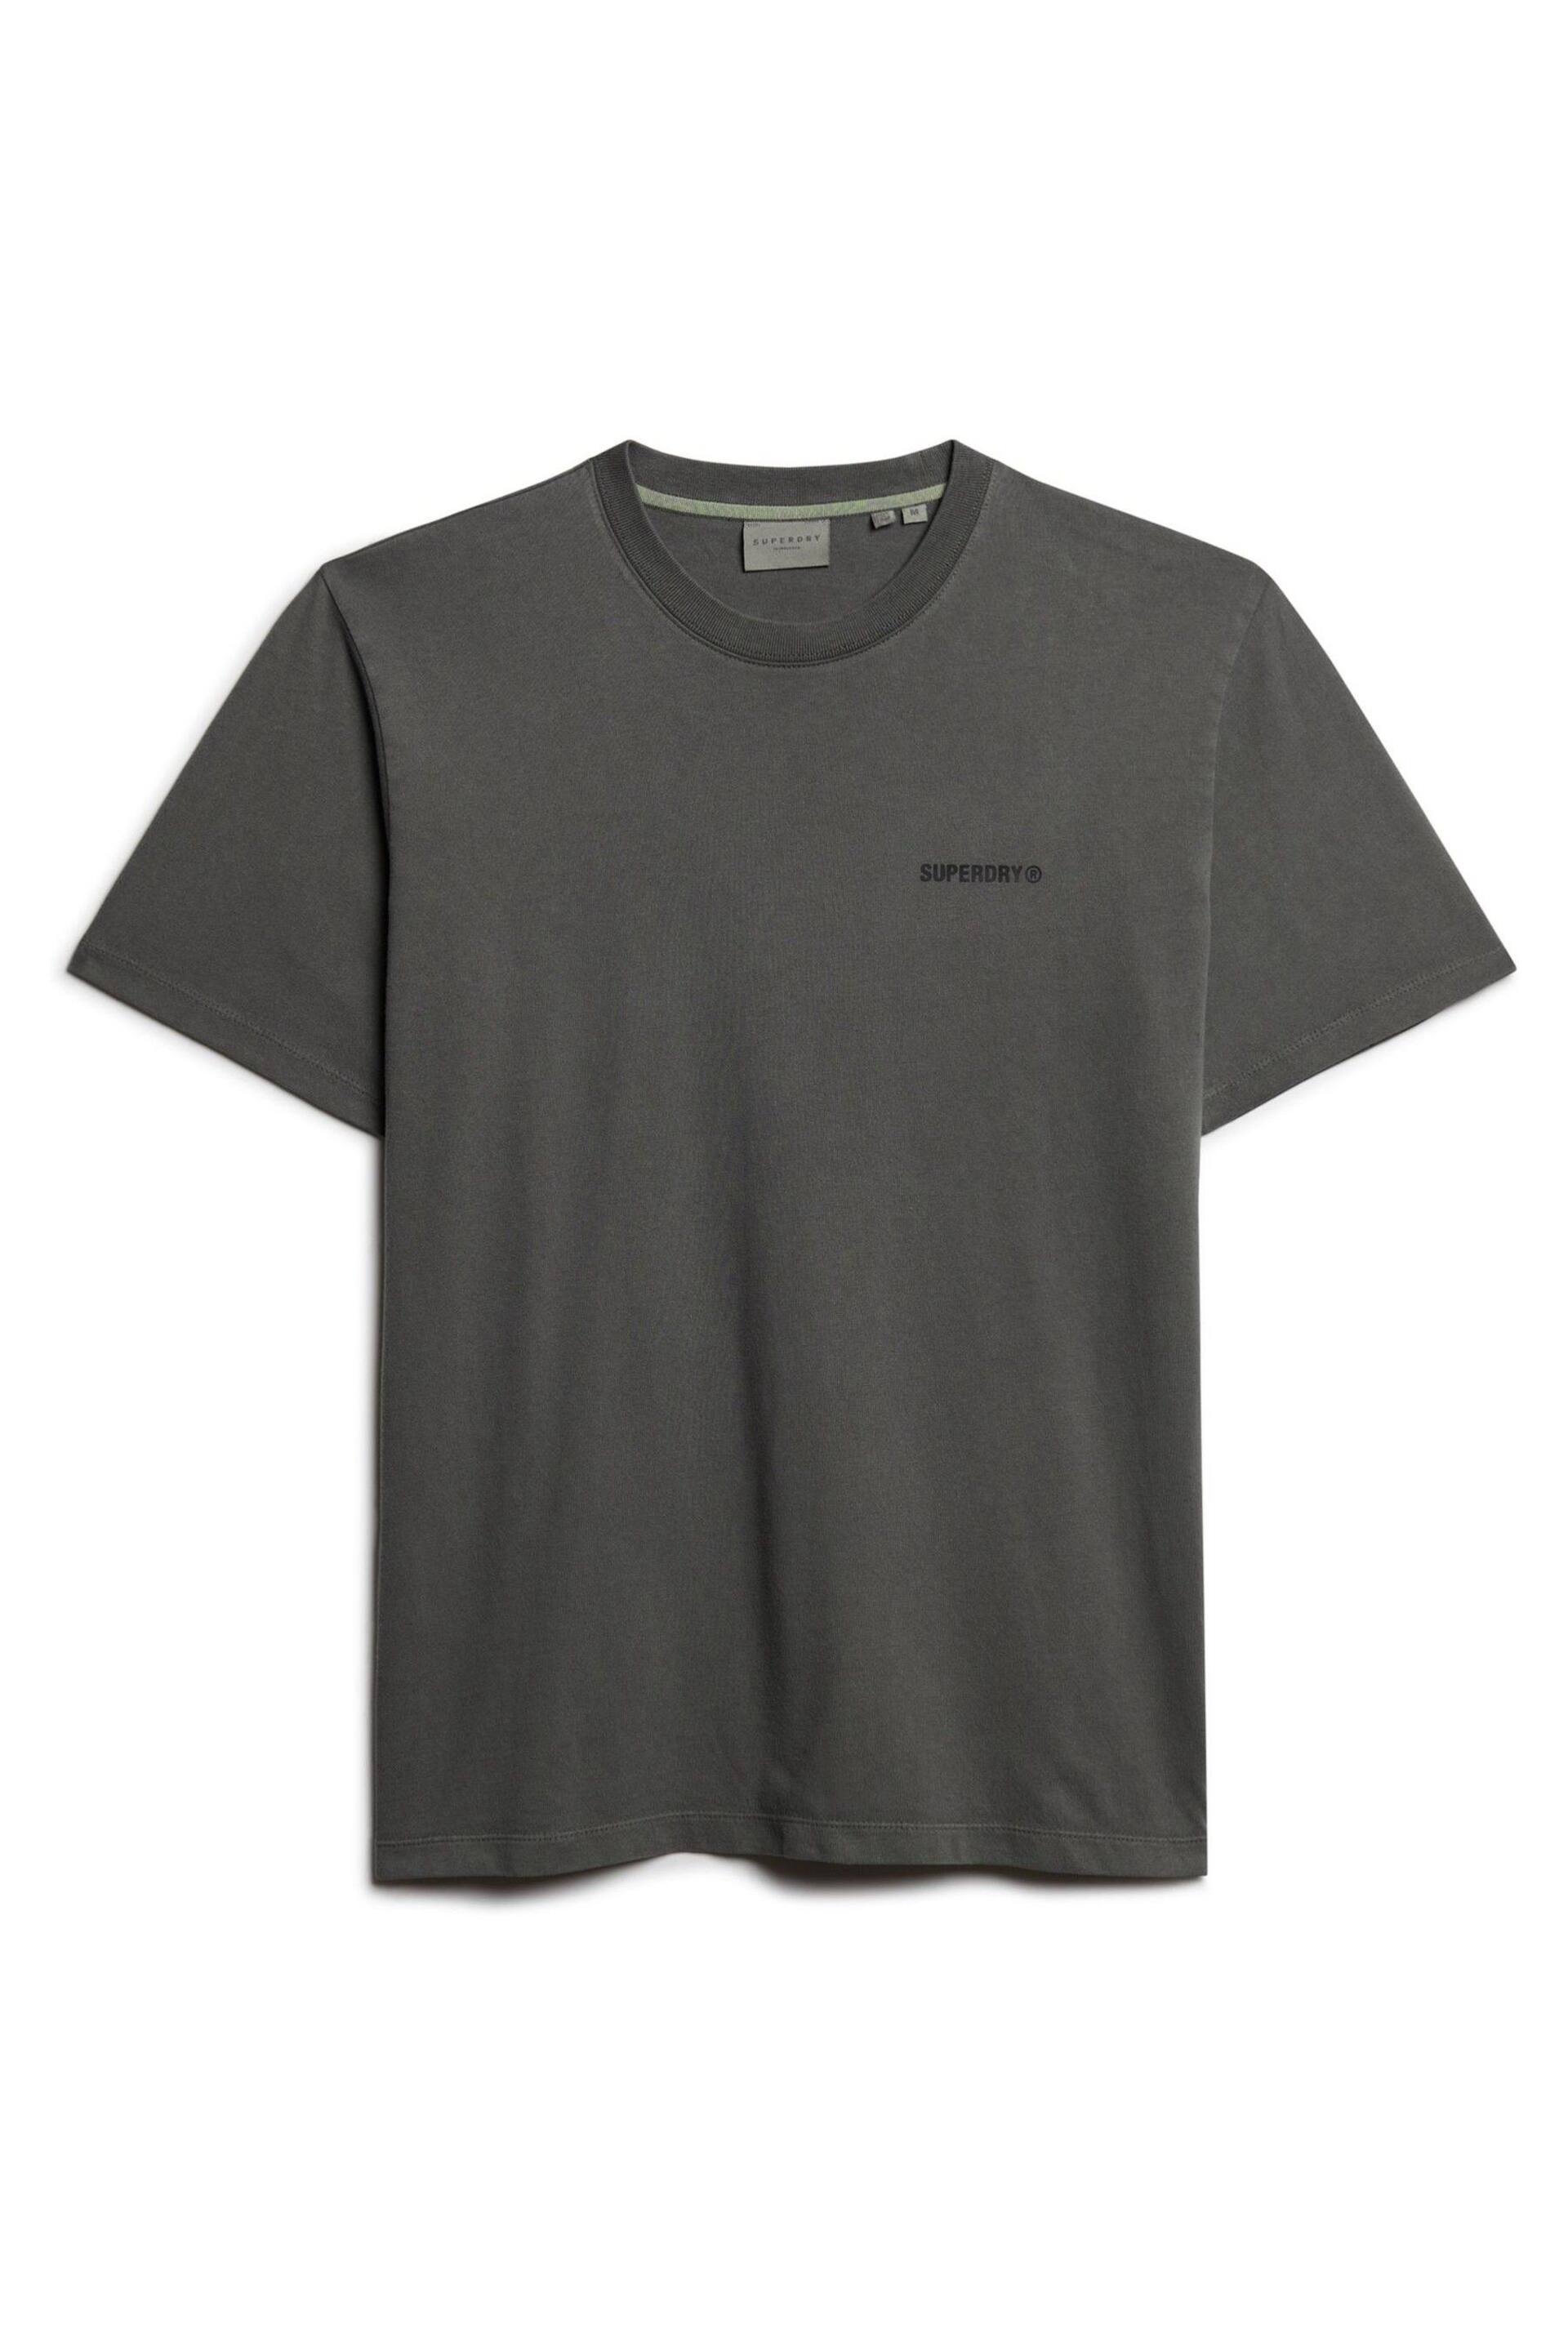 Superdry Grey Overdyed Logo Loose T-Shirt - Image 4 of 6